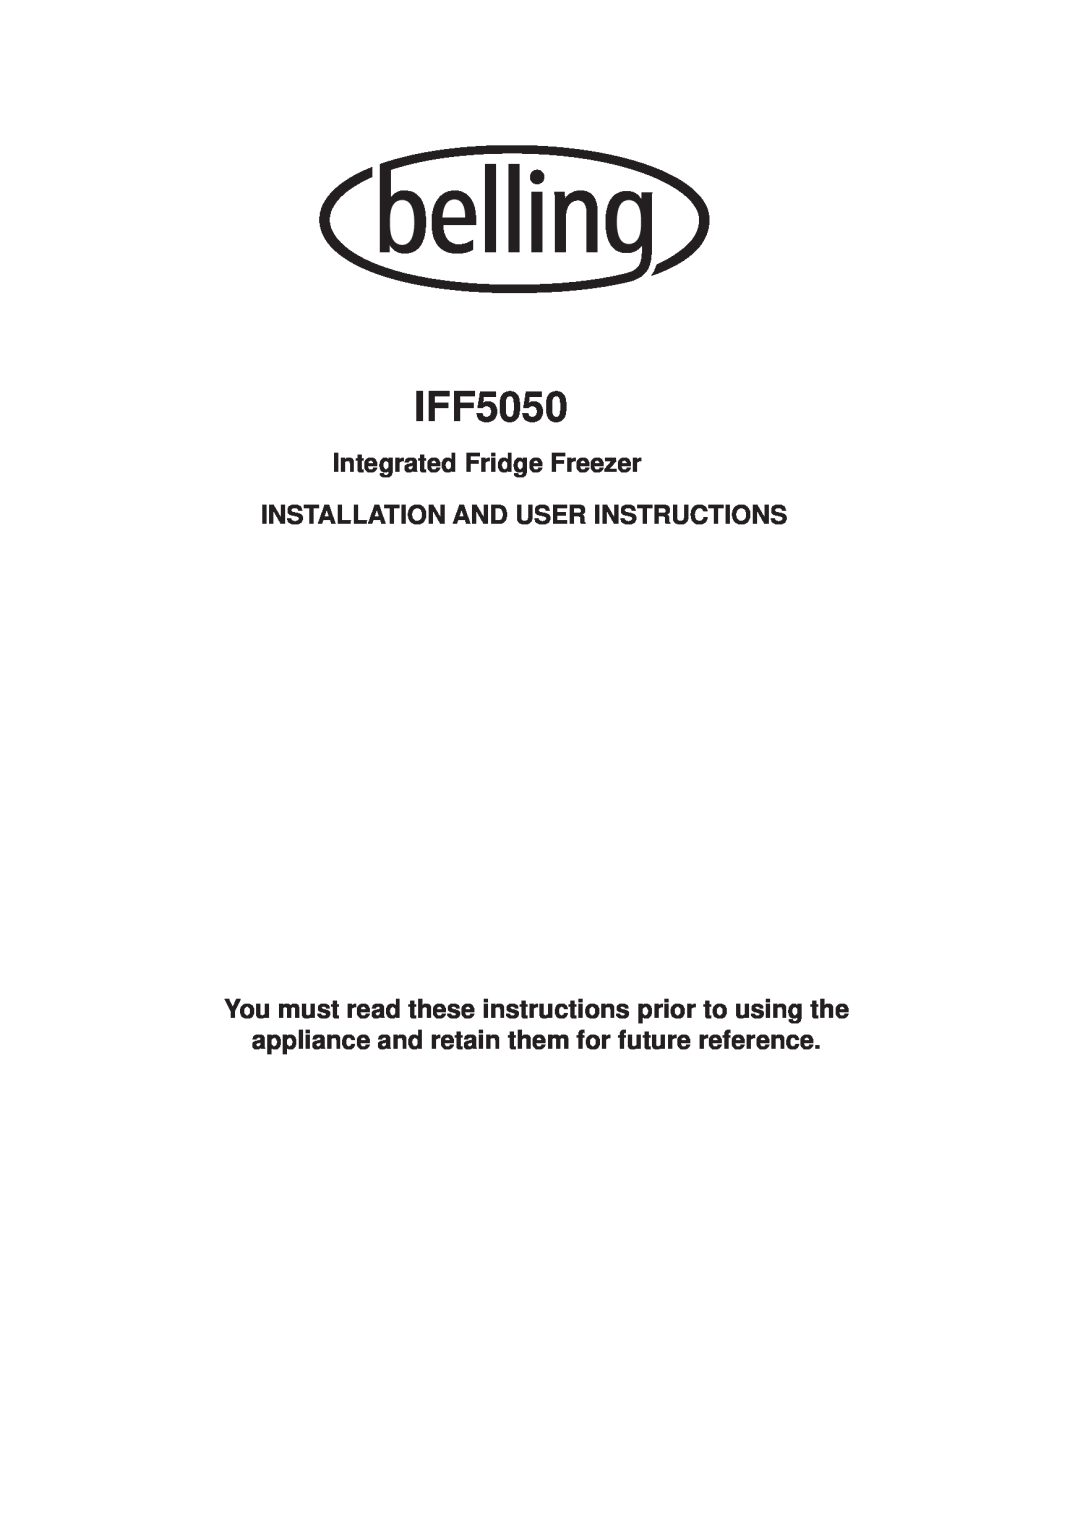 Glen Dimplex Home Appliances Ltd IFF5050 manual Integrated Fridge Freezer INSTALLATION AND USER INSTRUCTIONS 